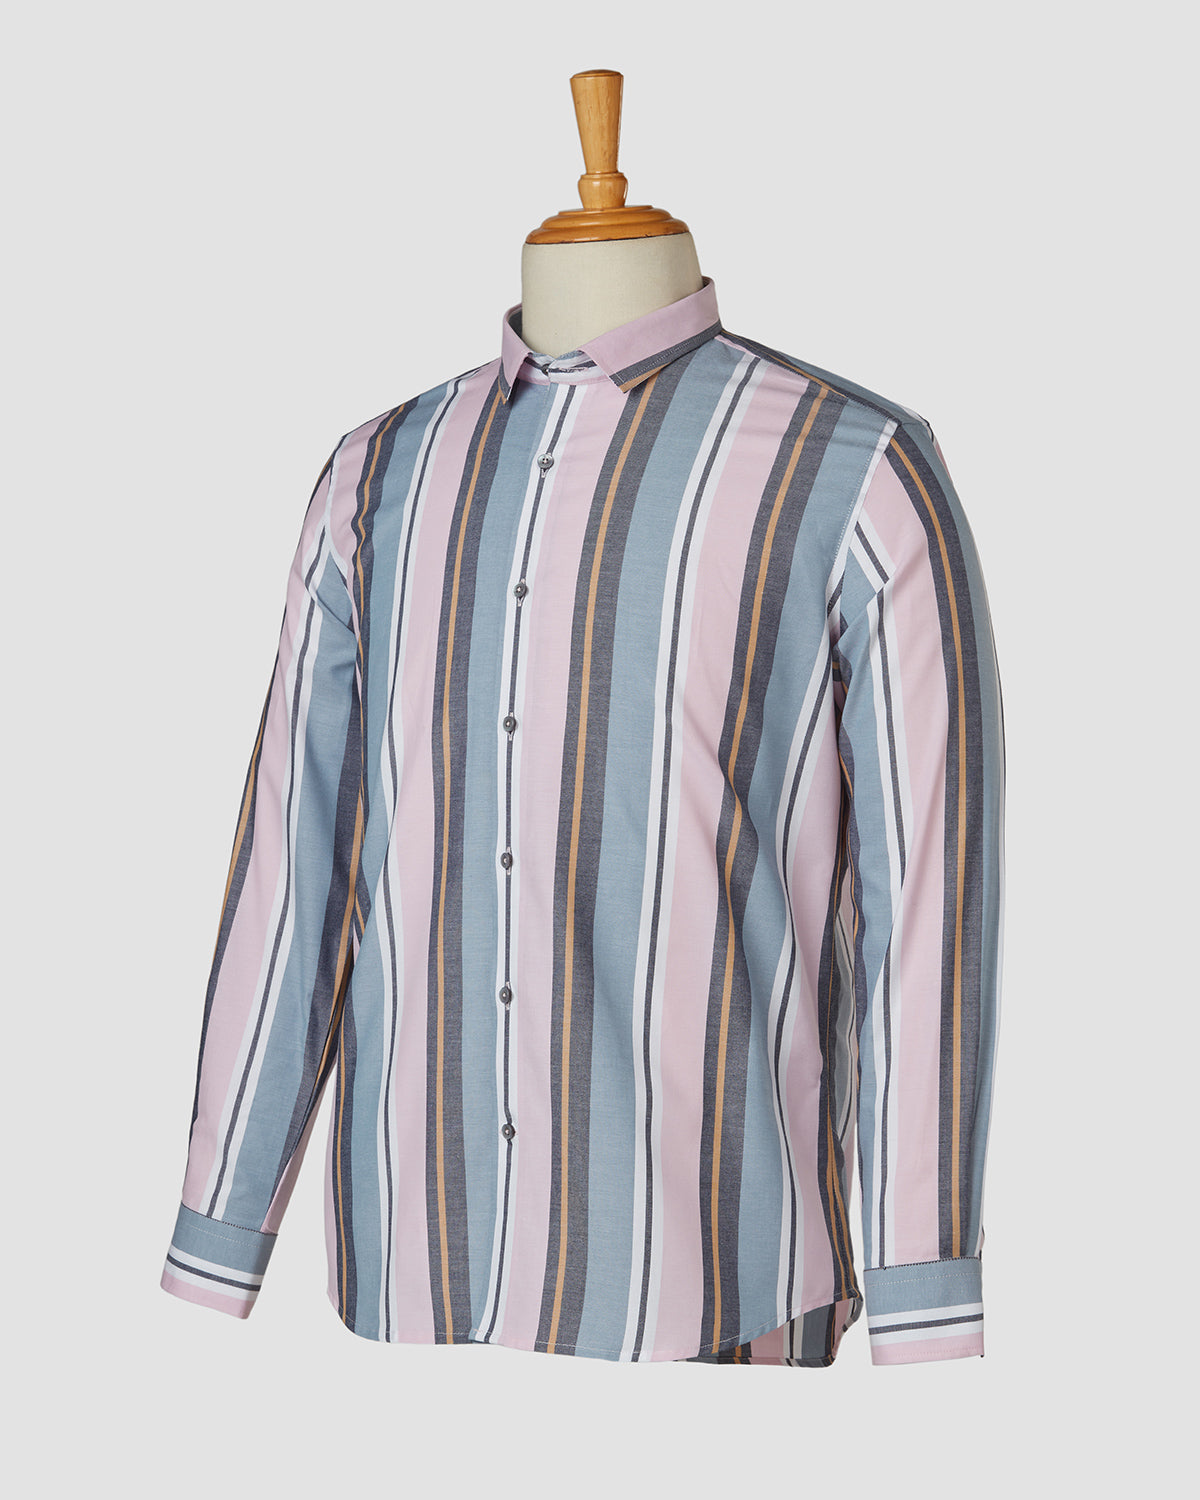 Bombay Shirt Company - Gelato Oxford Striped Shirt